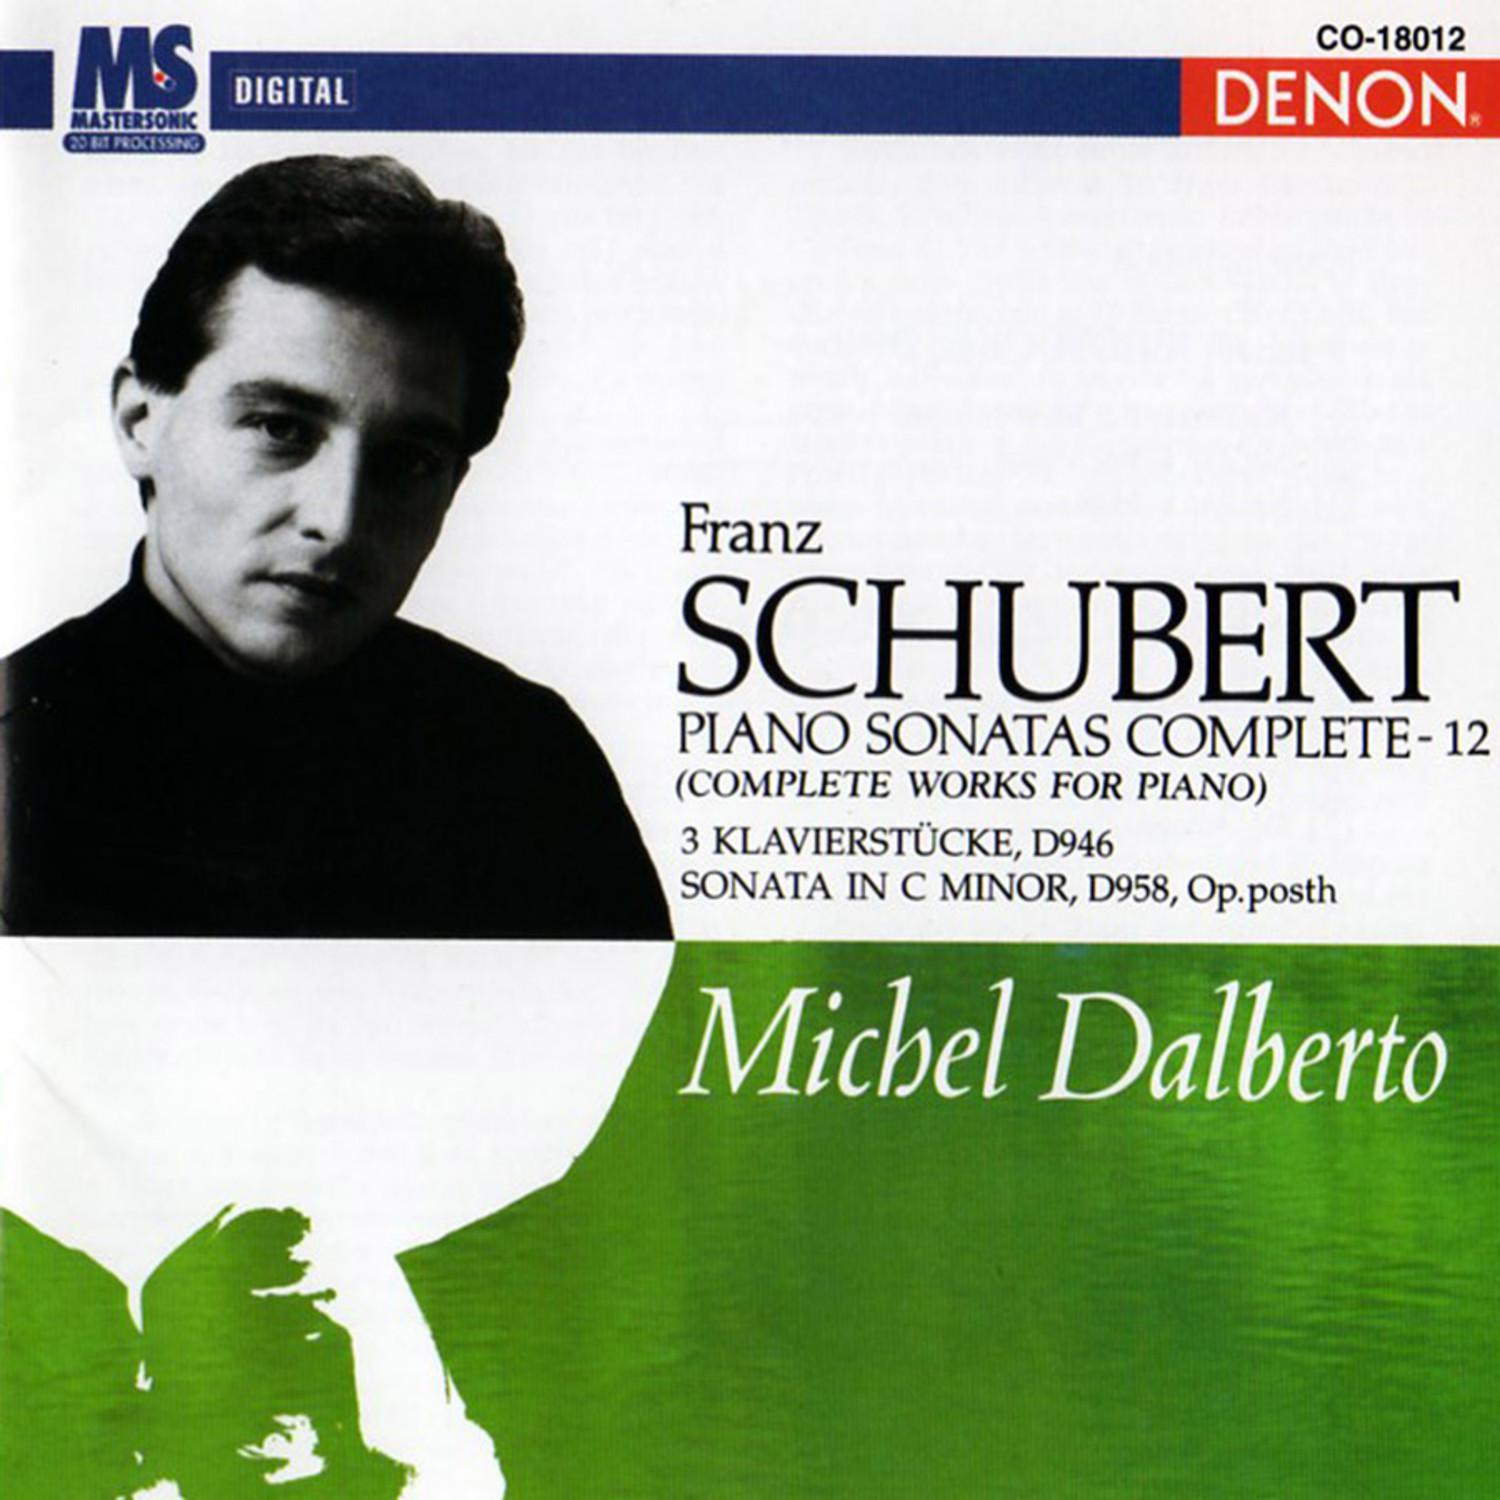 Schubert: Piano Sonatas Complete, Vol. 12 (Complete Works for Piano)